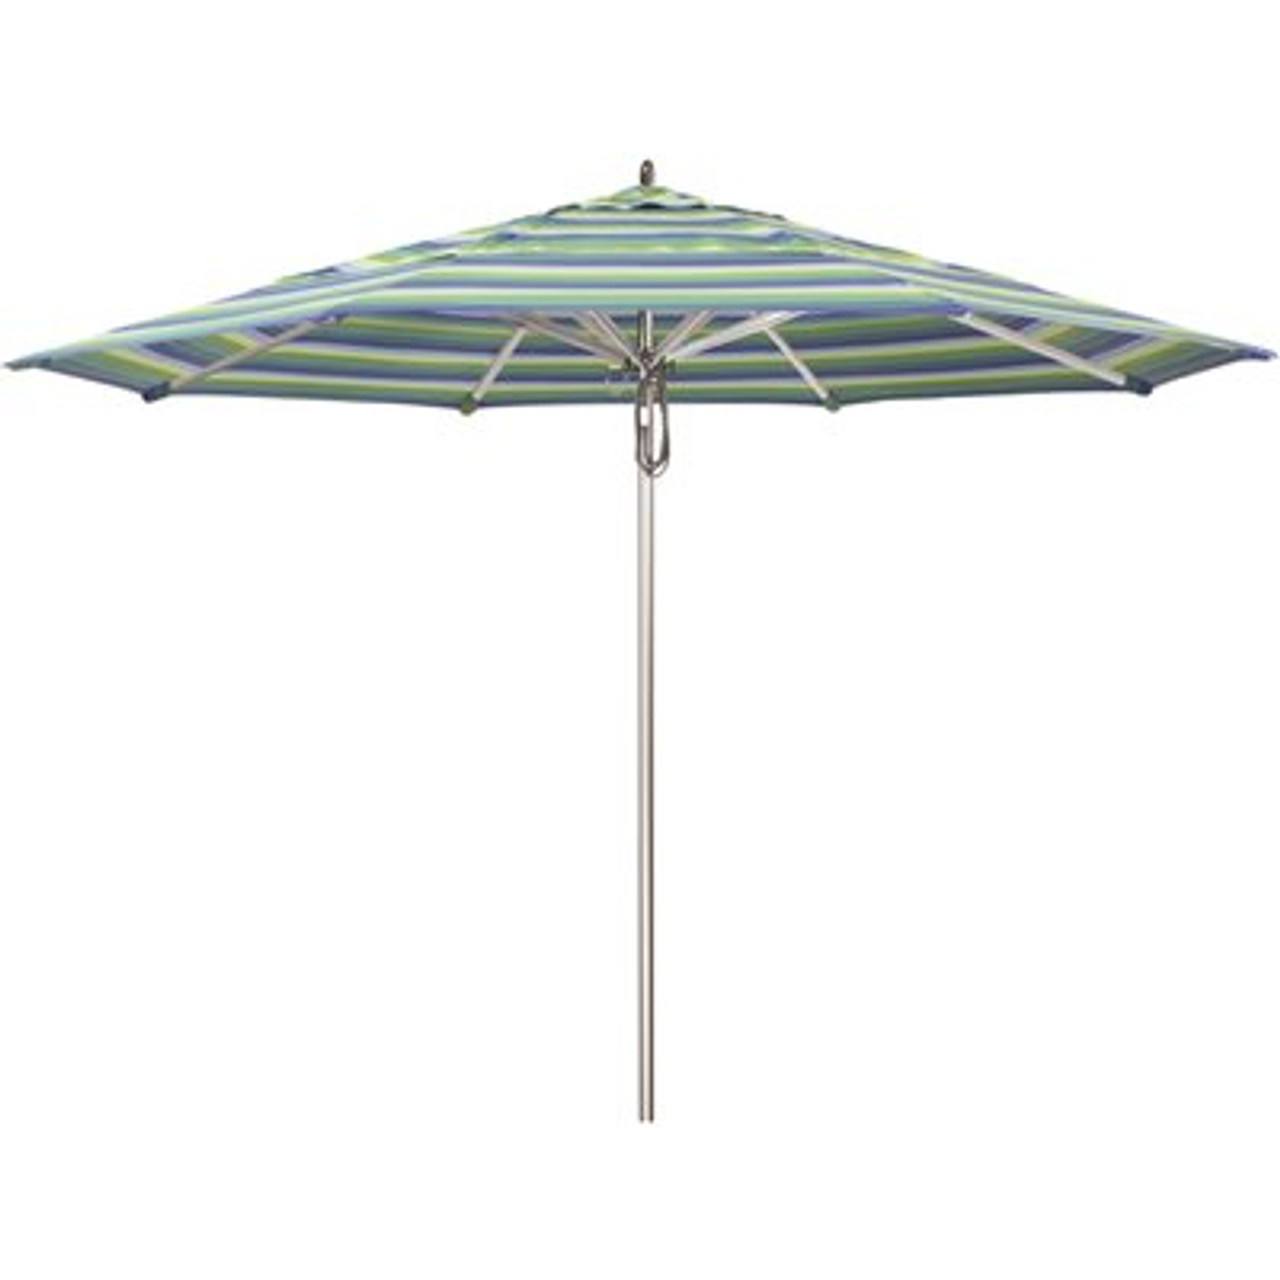 California Umbrella 11 ft. Silver Aluminum Commercial Market Patio Umbrella with Pulley Lift in Seville Seaside Sunbrella